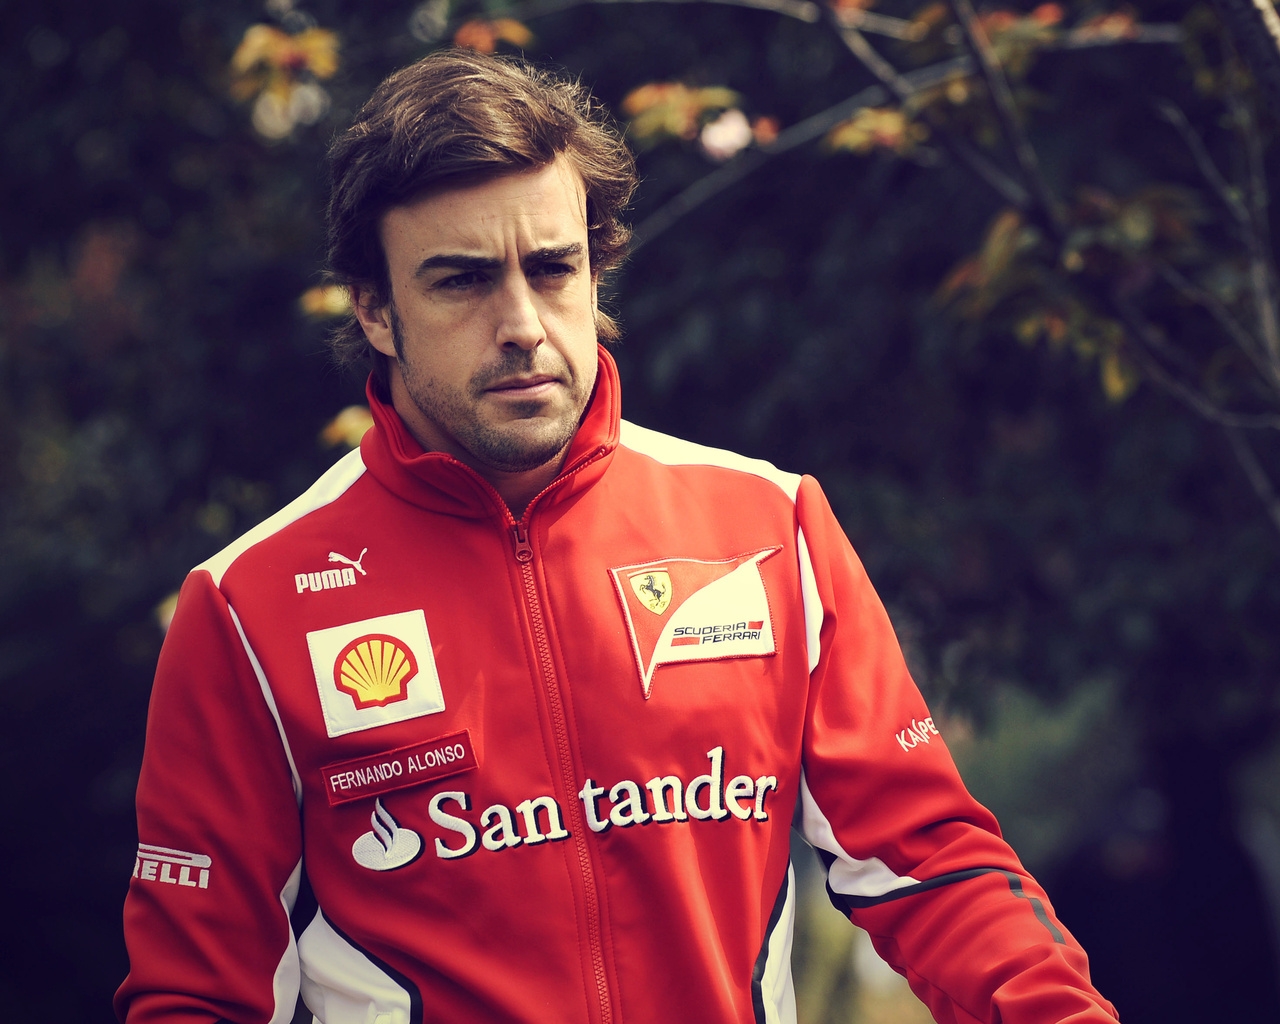 Fernando Alonso Look for 1280 x 1024 resolution